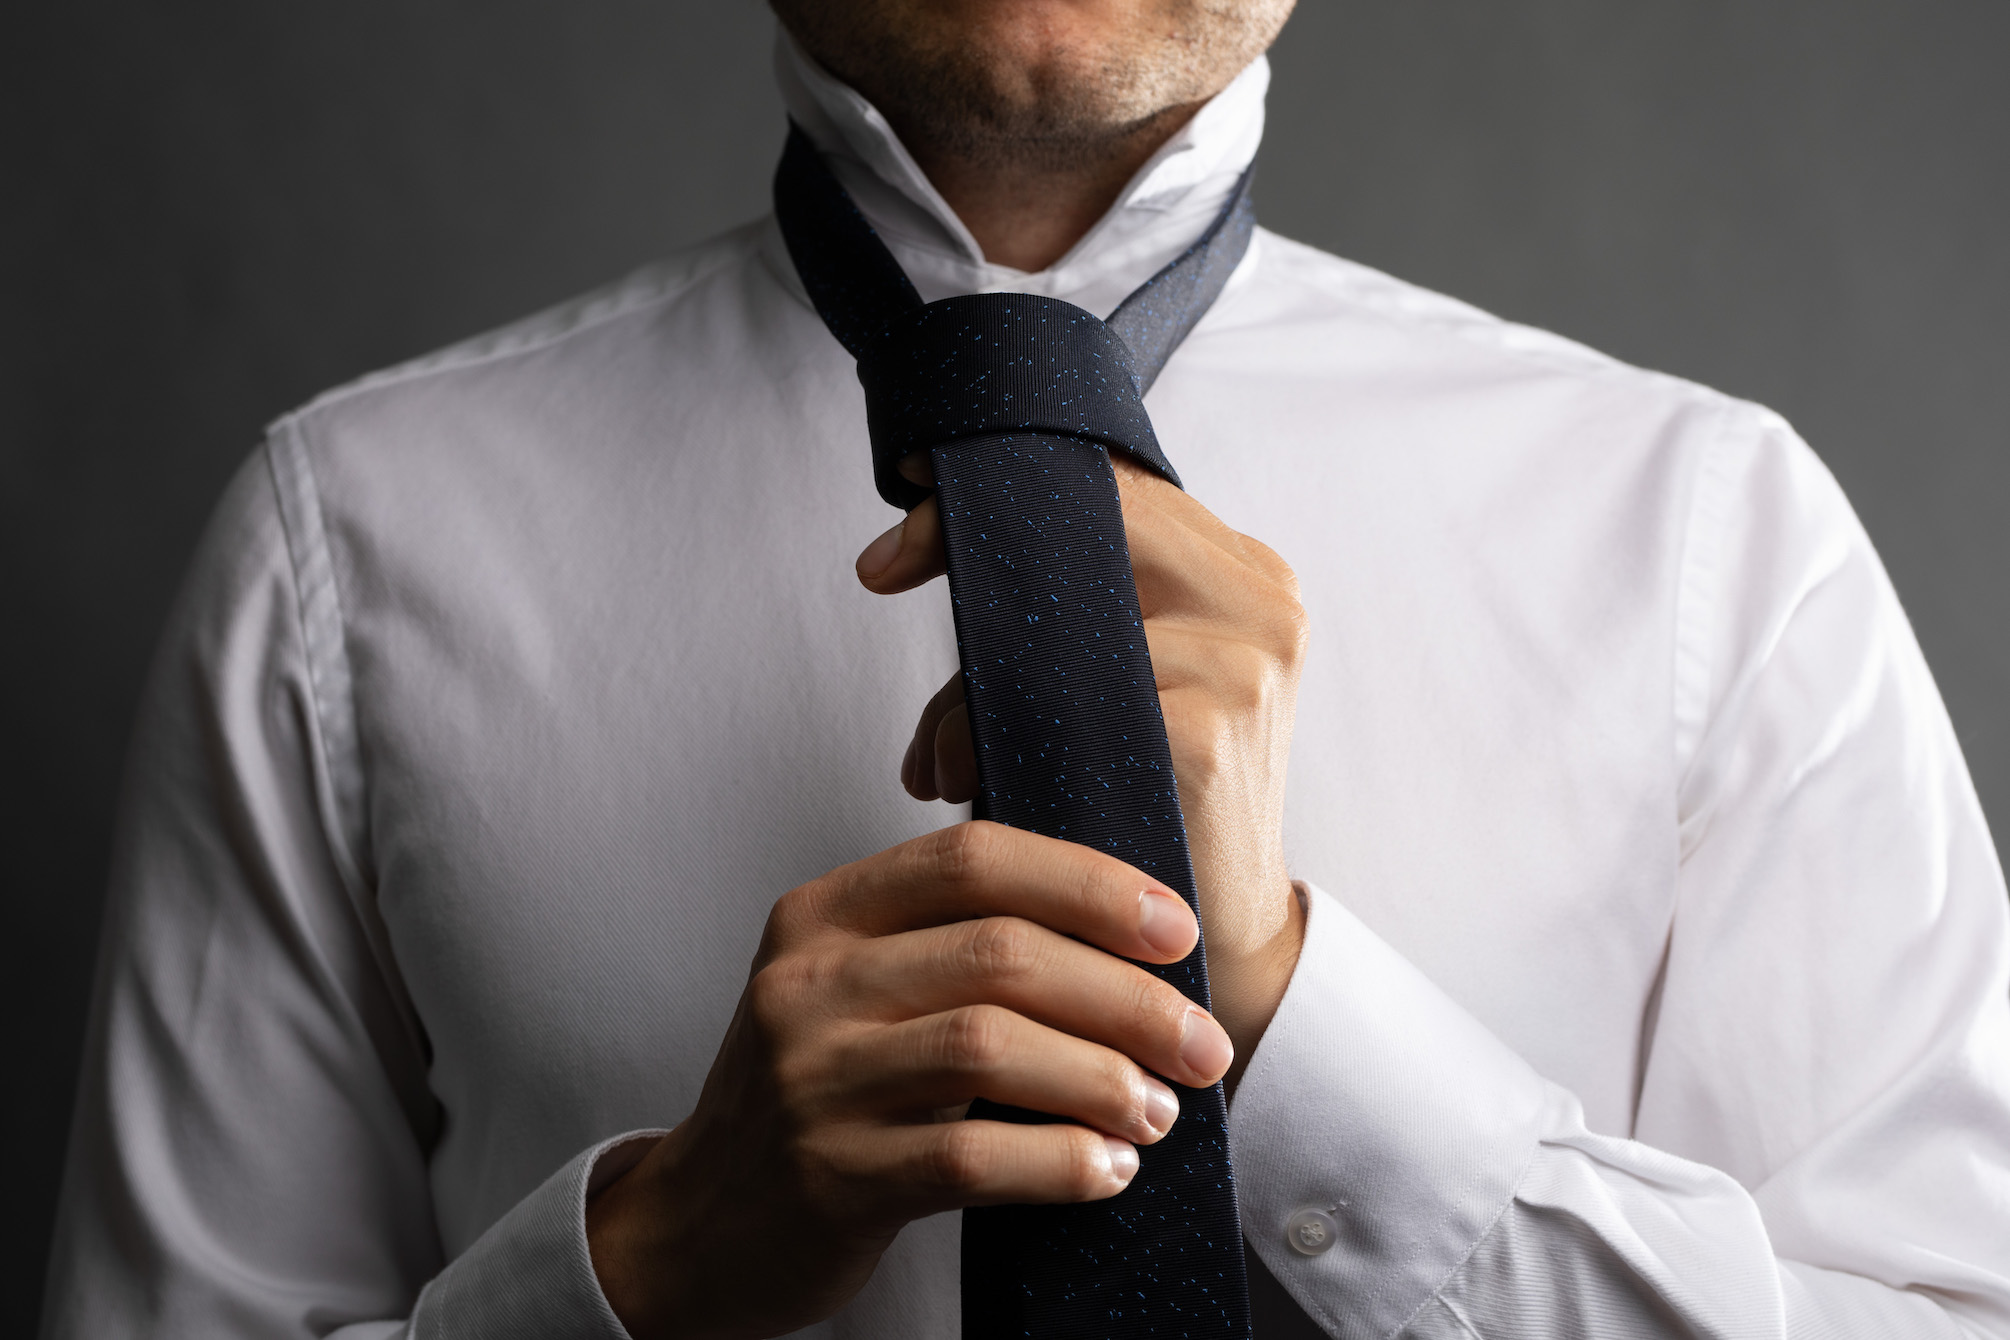 Necktie tie wrists how a to with How do